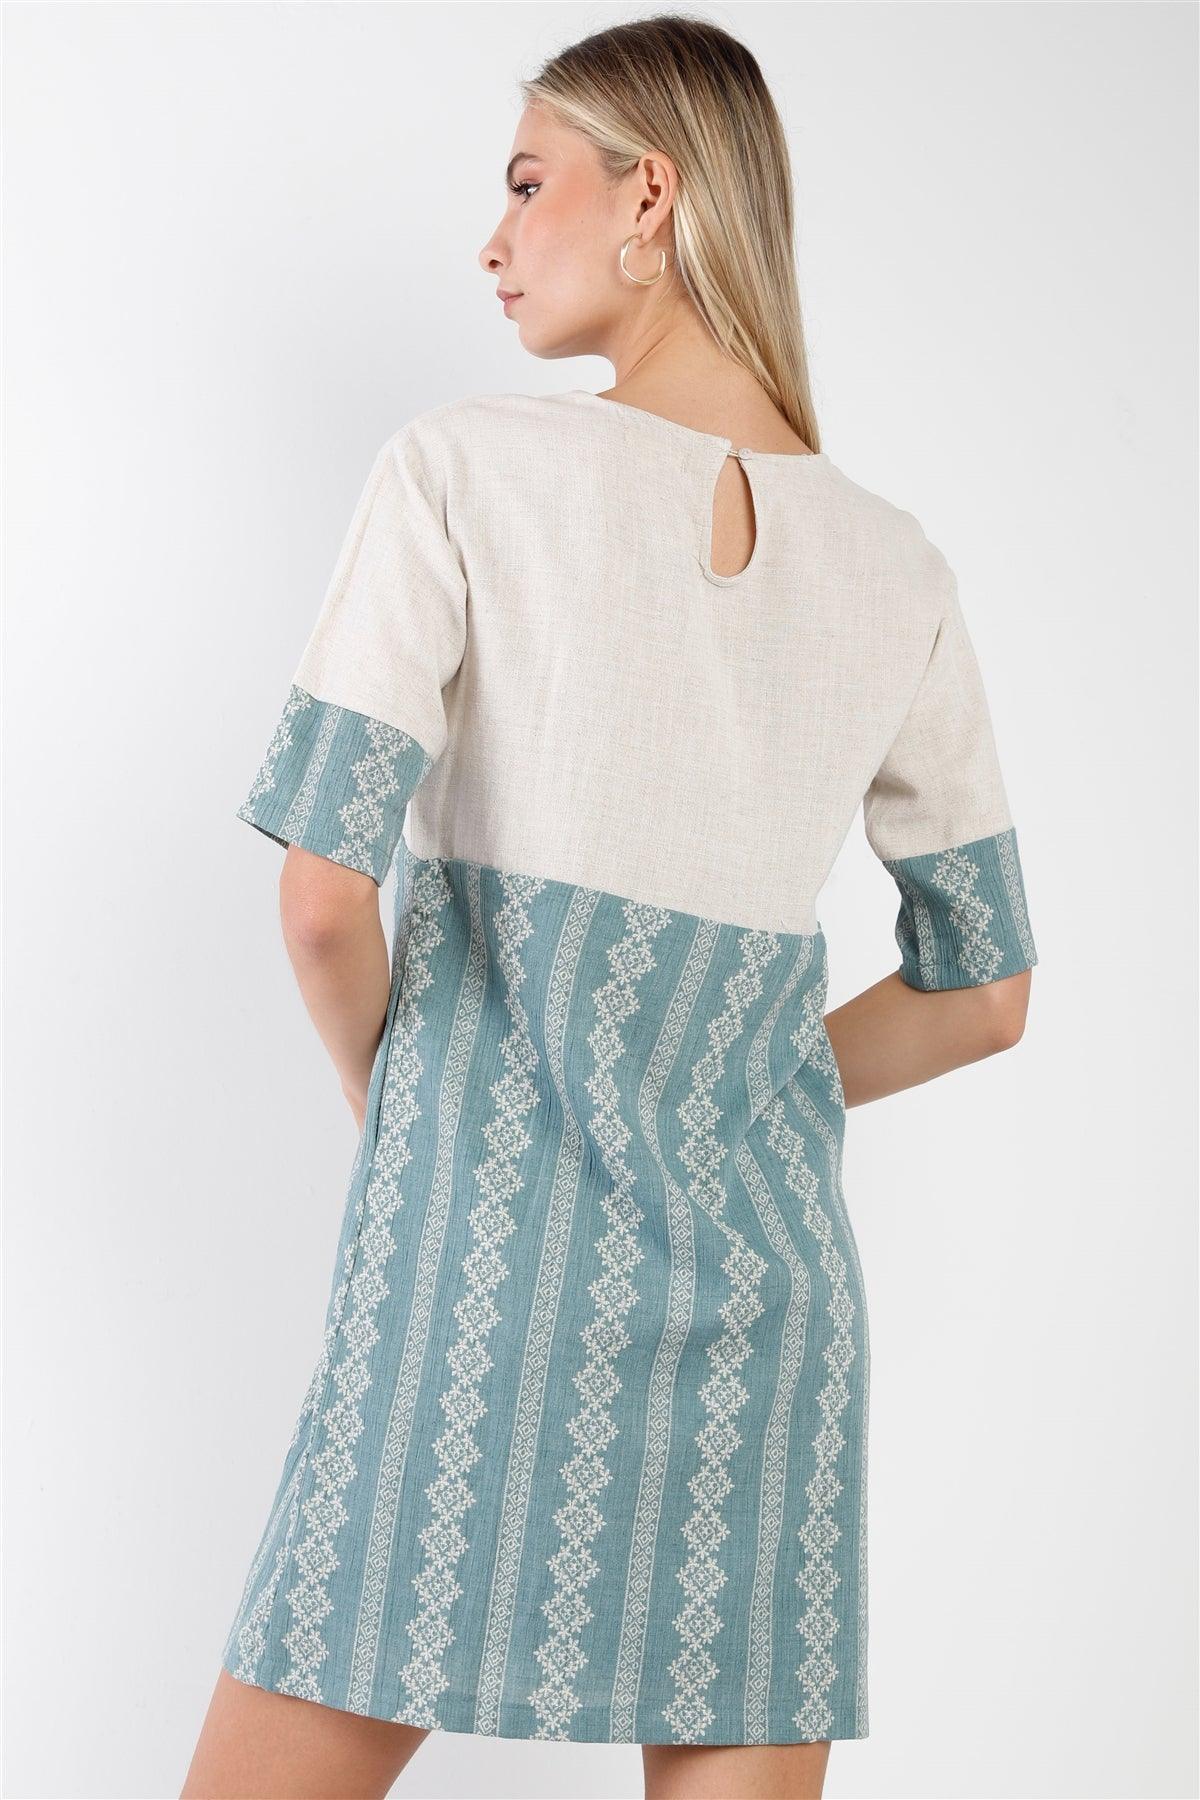 Sage Contrast Design Round Neck Shift Boho Dress /2-2-2